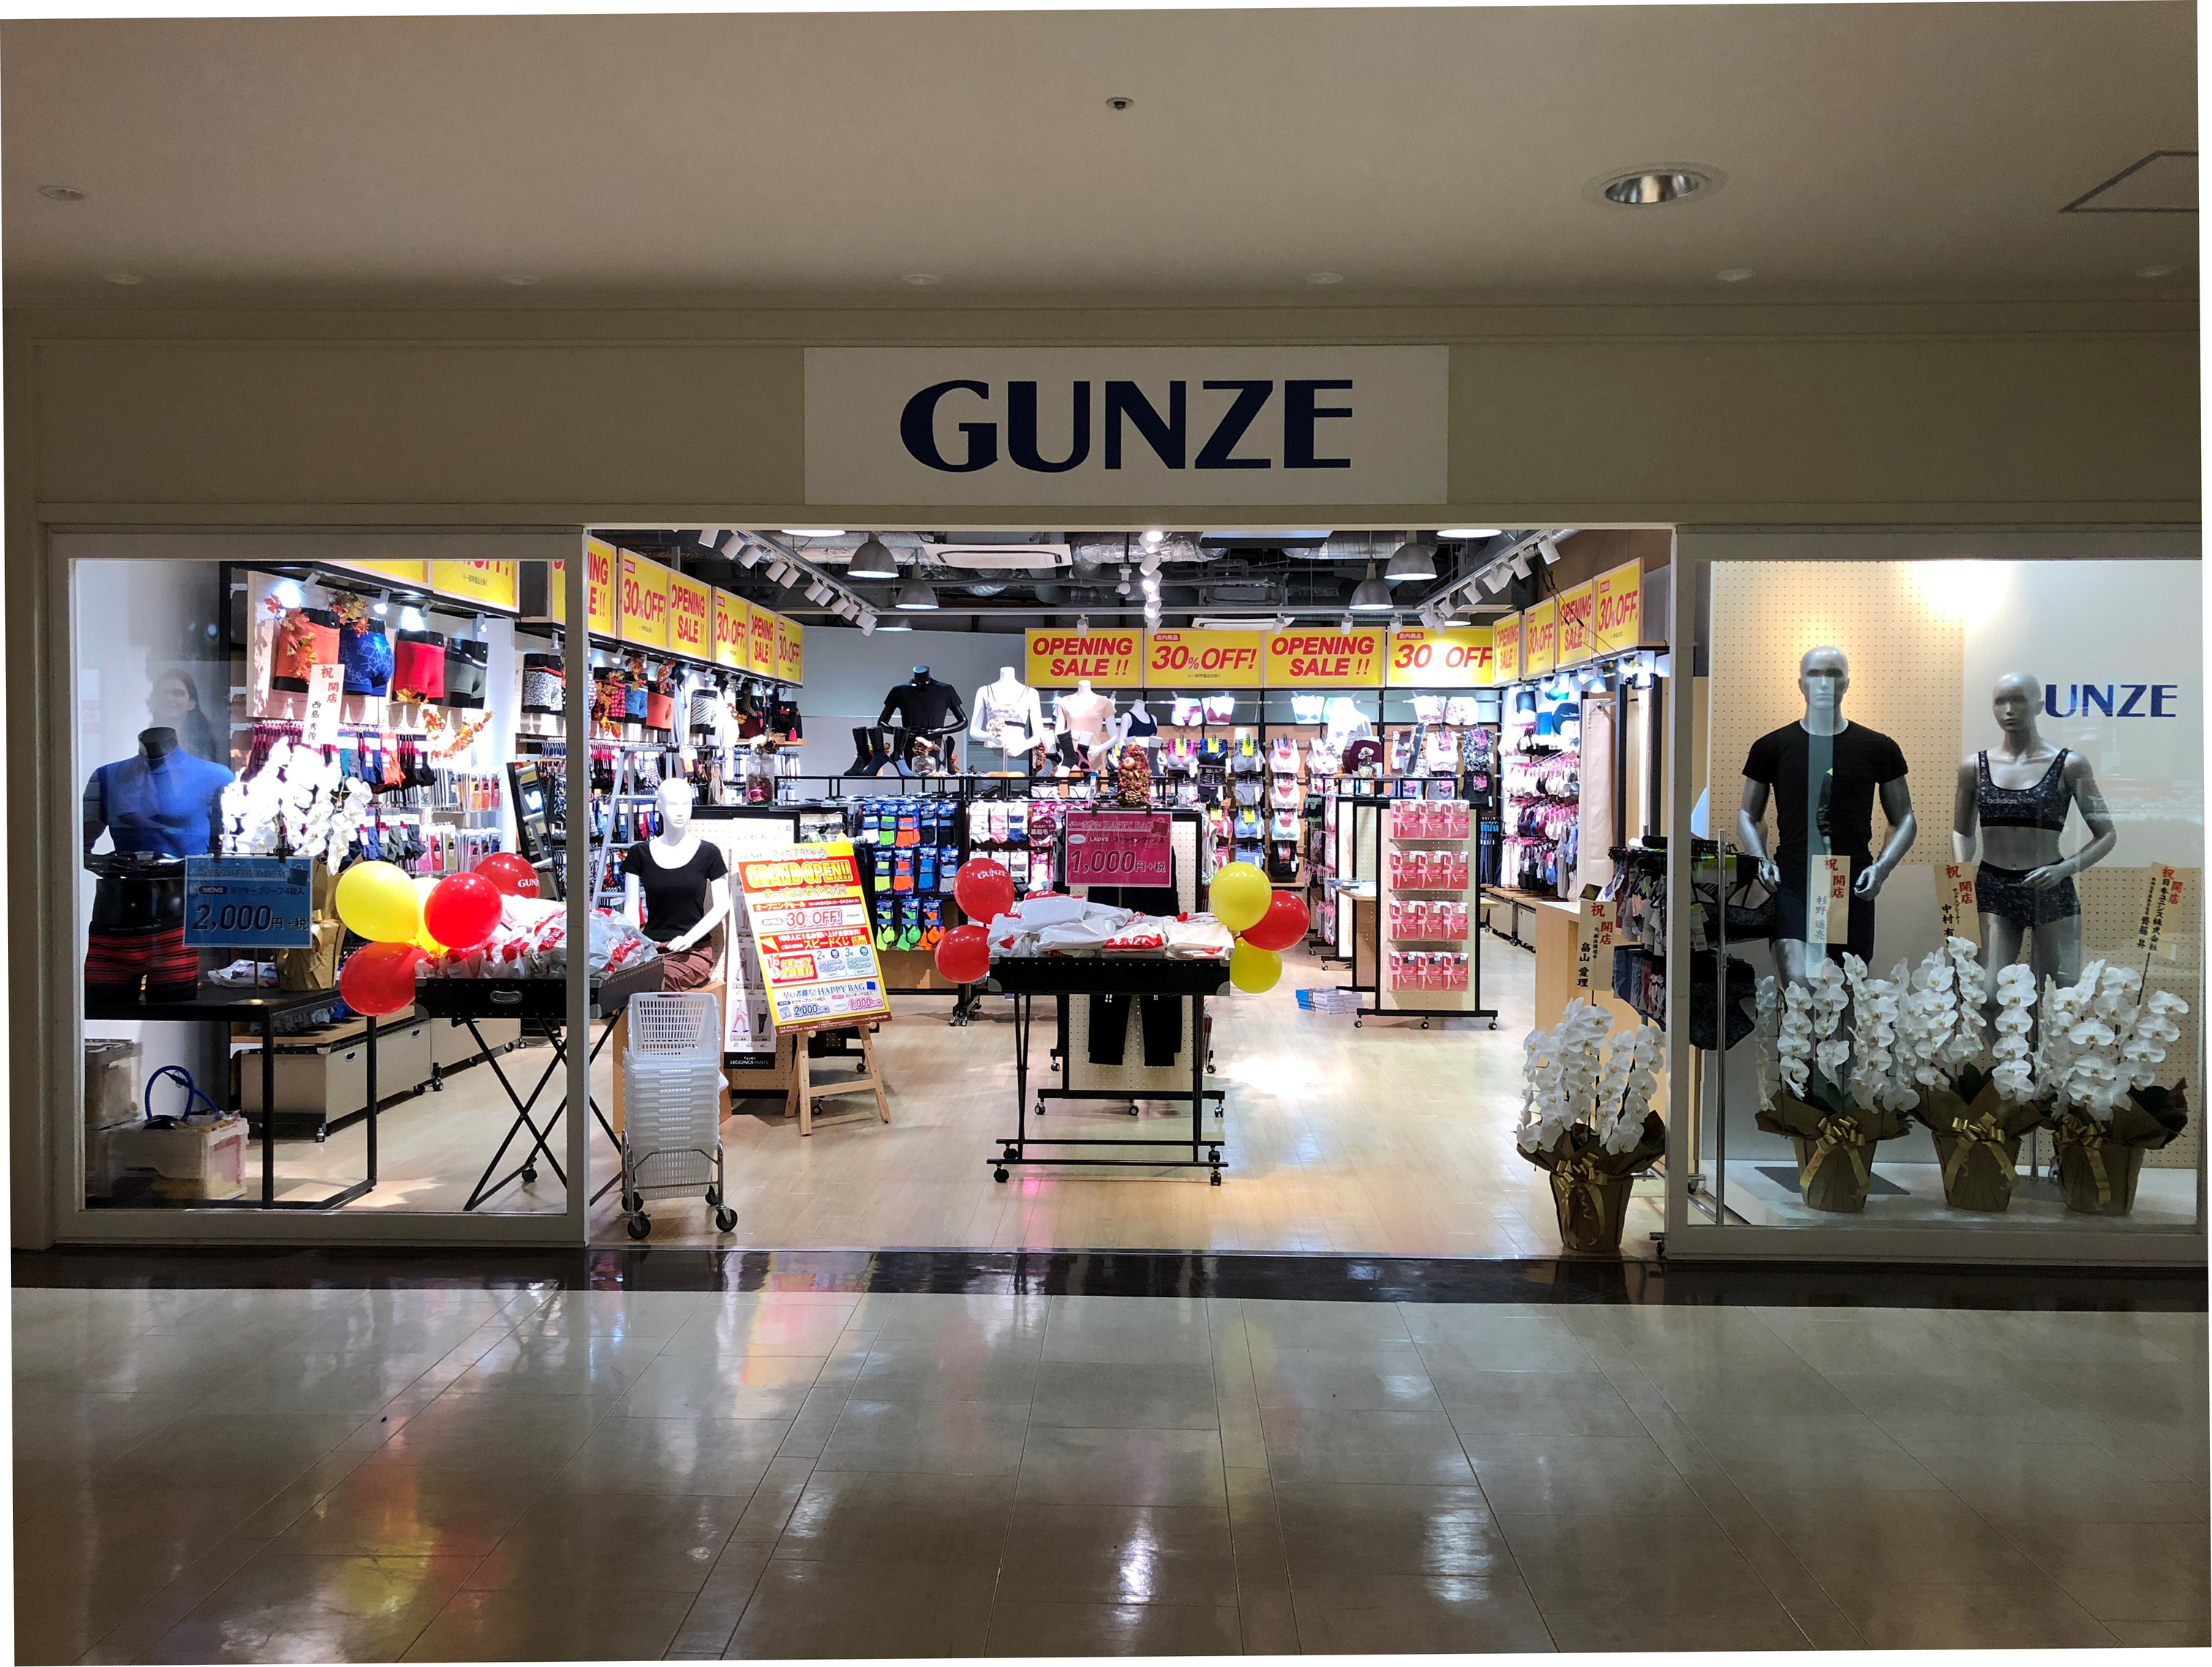 Gunze Outlet 三井アウトレットパーク マリンピア神戸店 9月5日 水 オープン グンゼ株式会社のプレスリリース